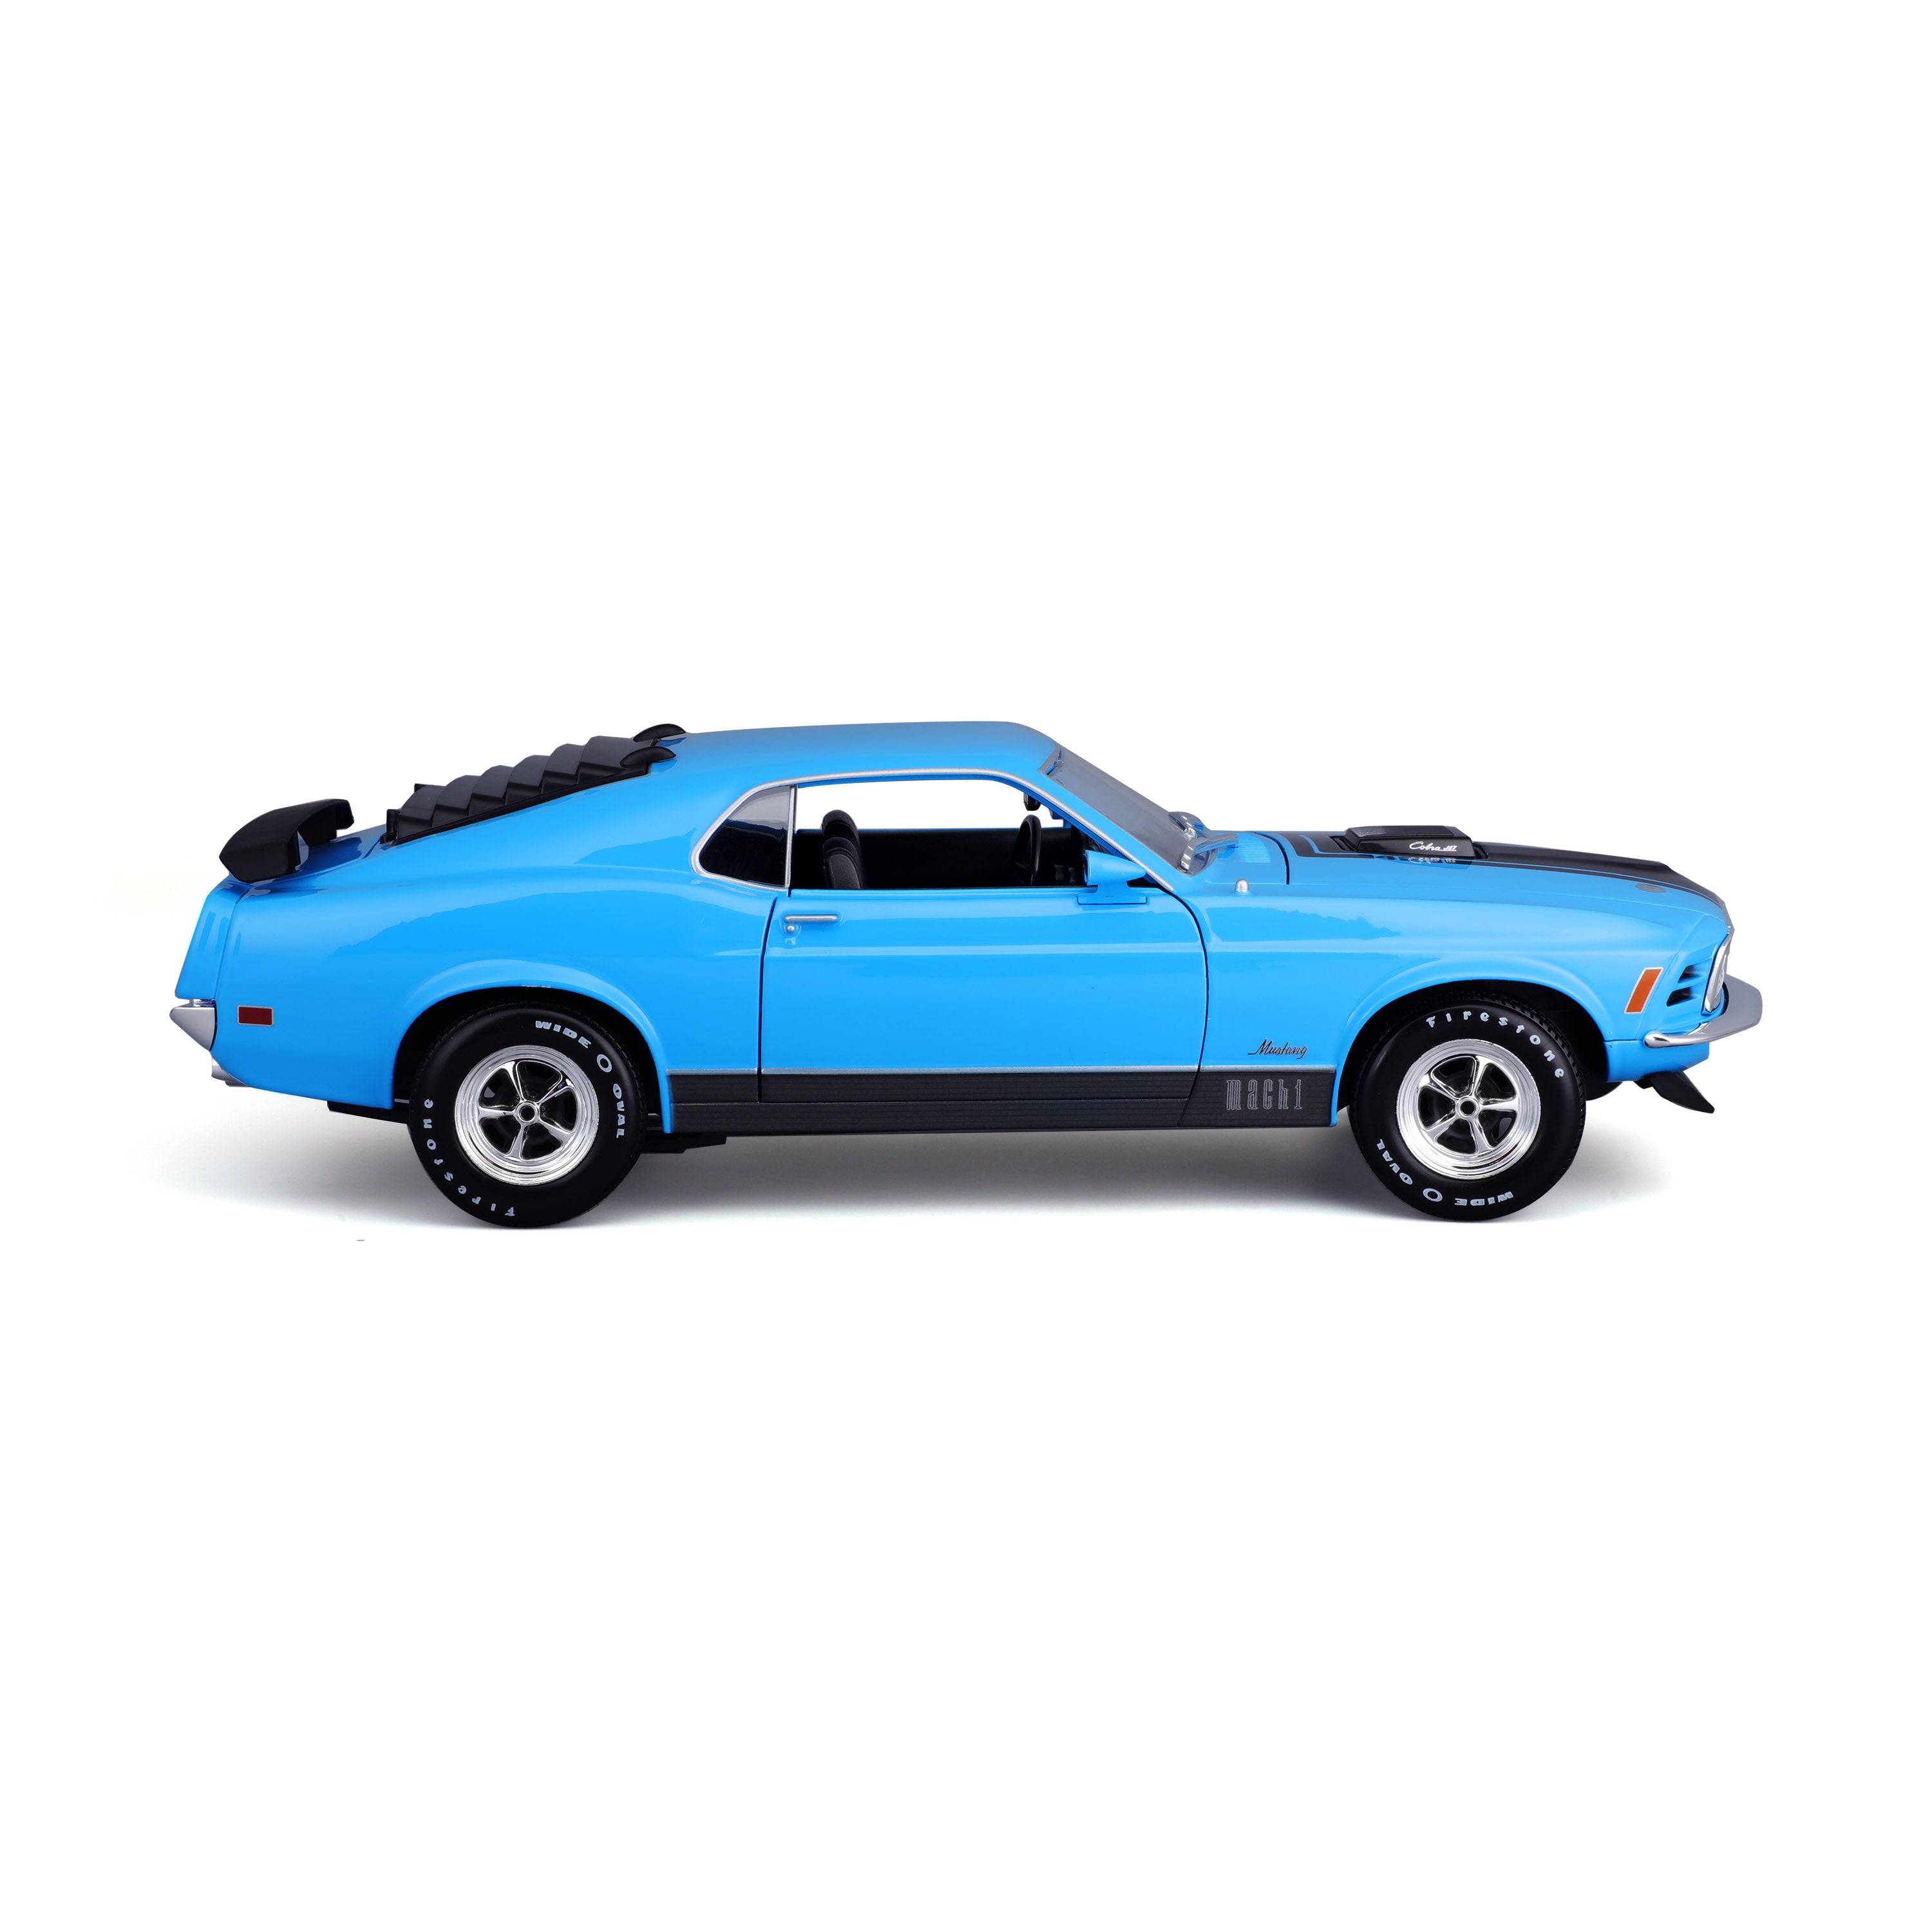 925759.004 - Bburago Maisto - Ford Mustang Mach 1 (1970) - 1:18 - BLU